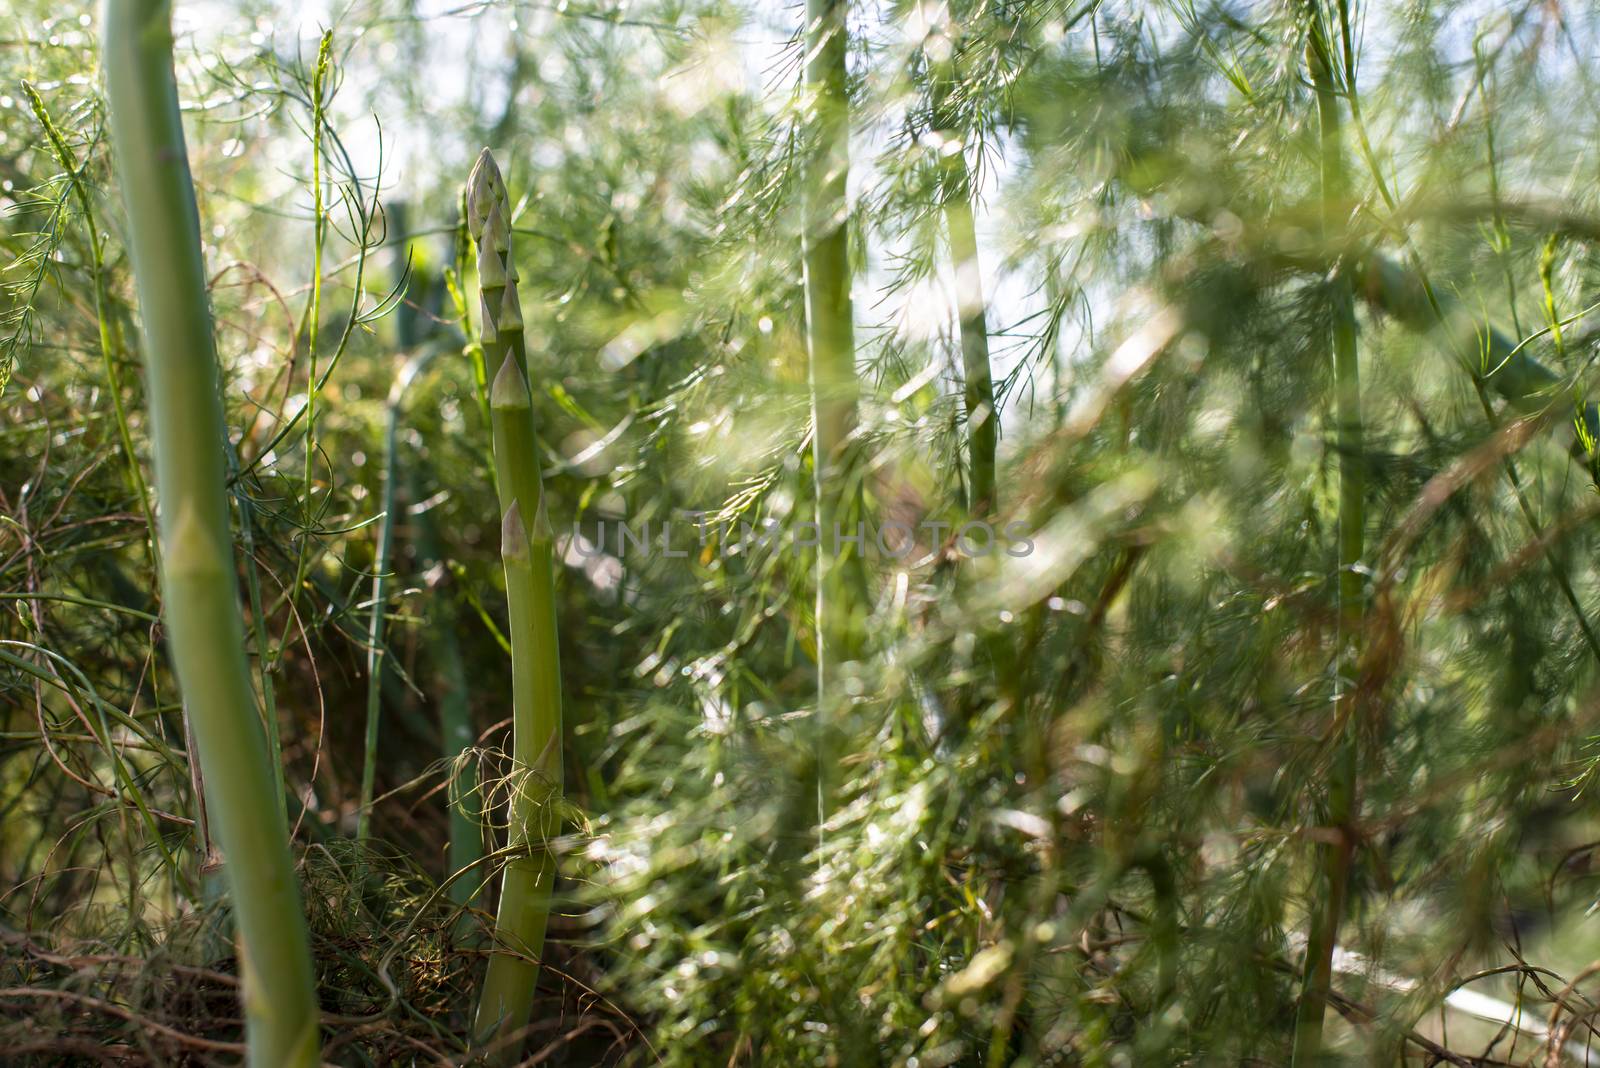 Asparagus plants in the nature. Close-up asparagus. Asparagus in industrial farm.